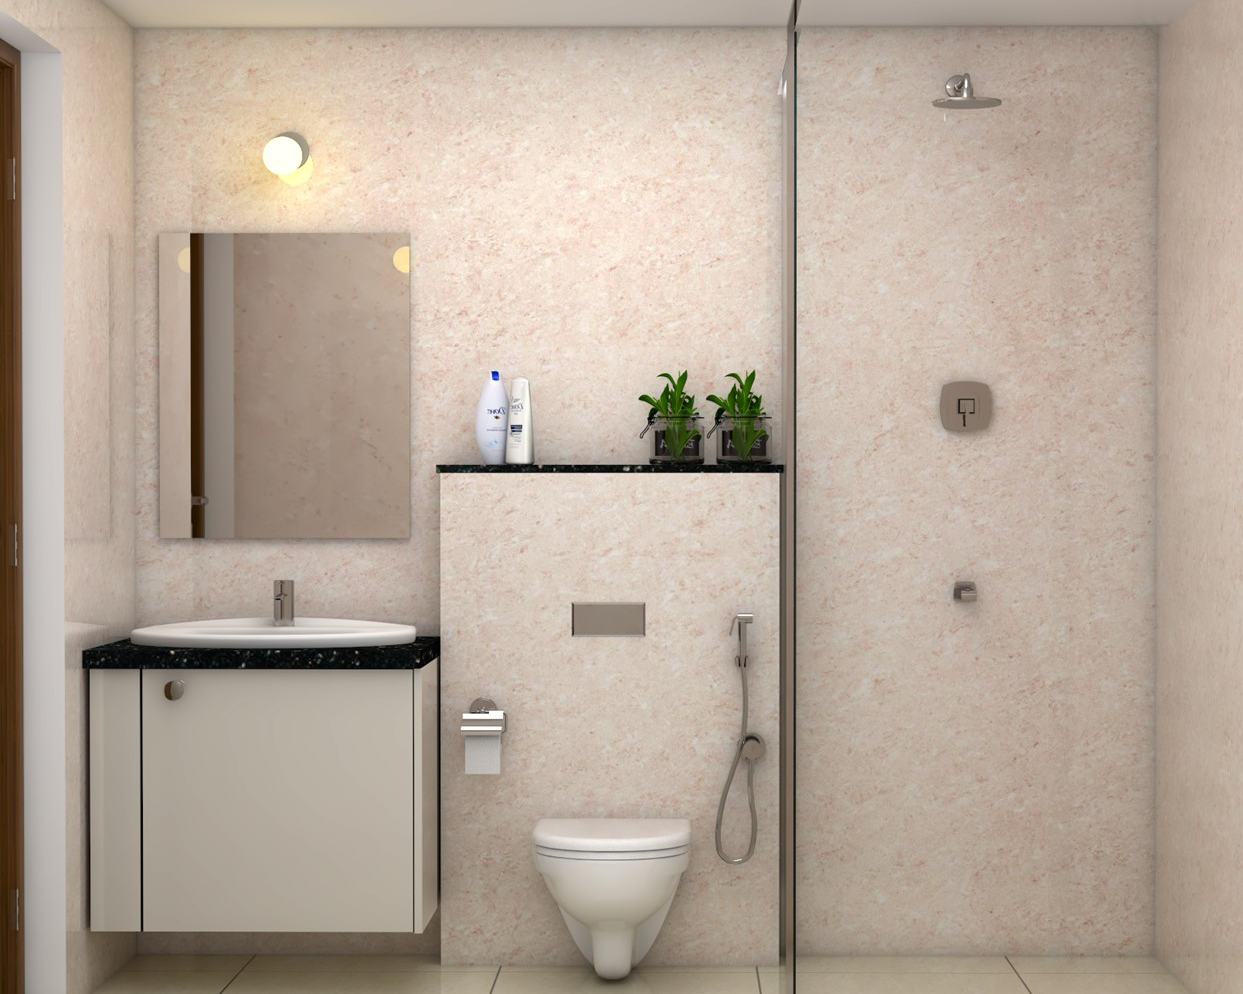 Contemporary Bathroom Design With Vanity Counter